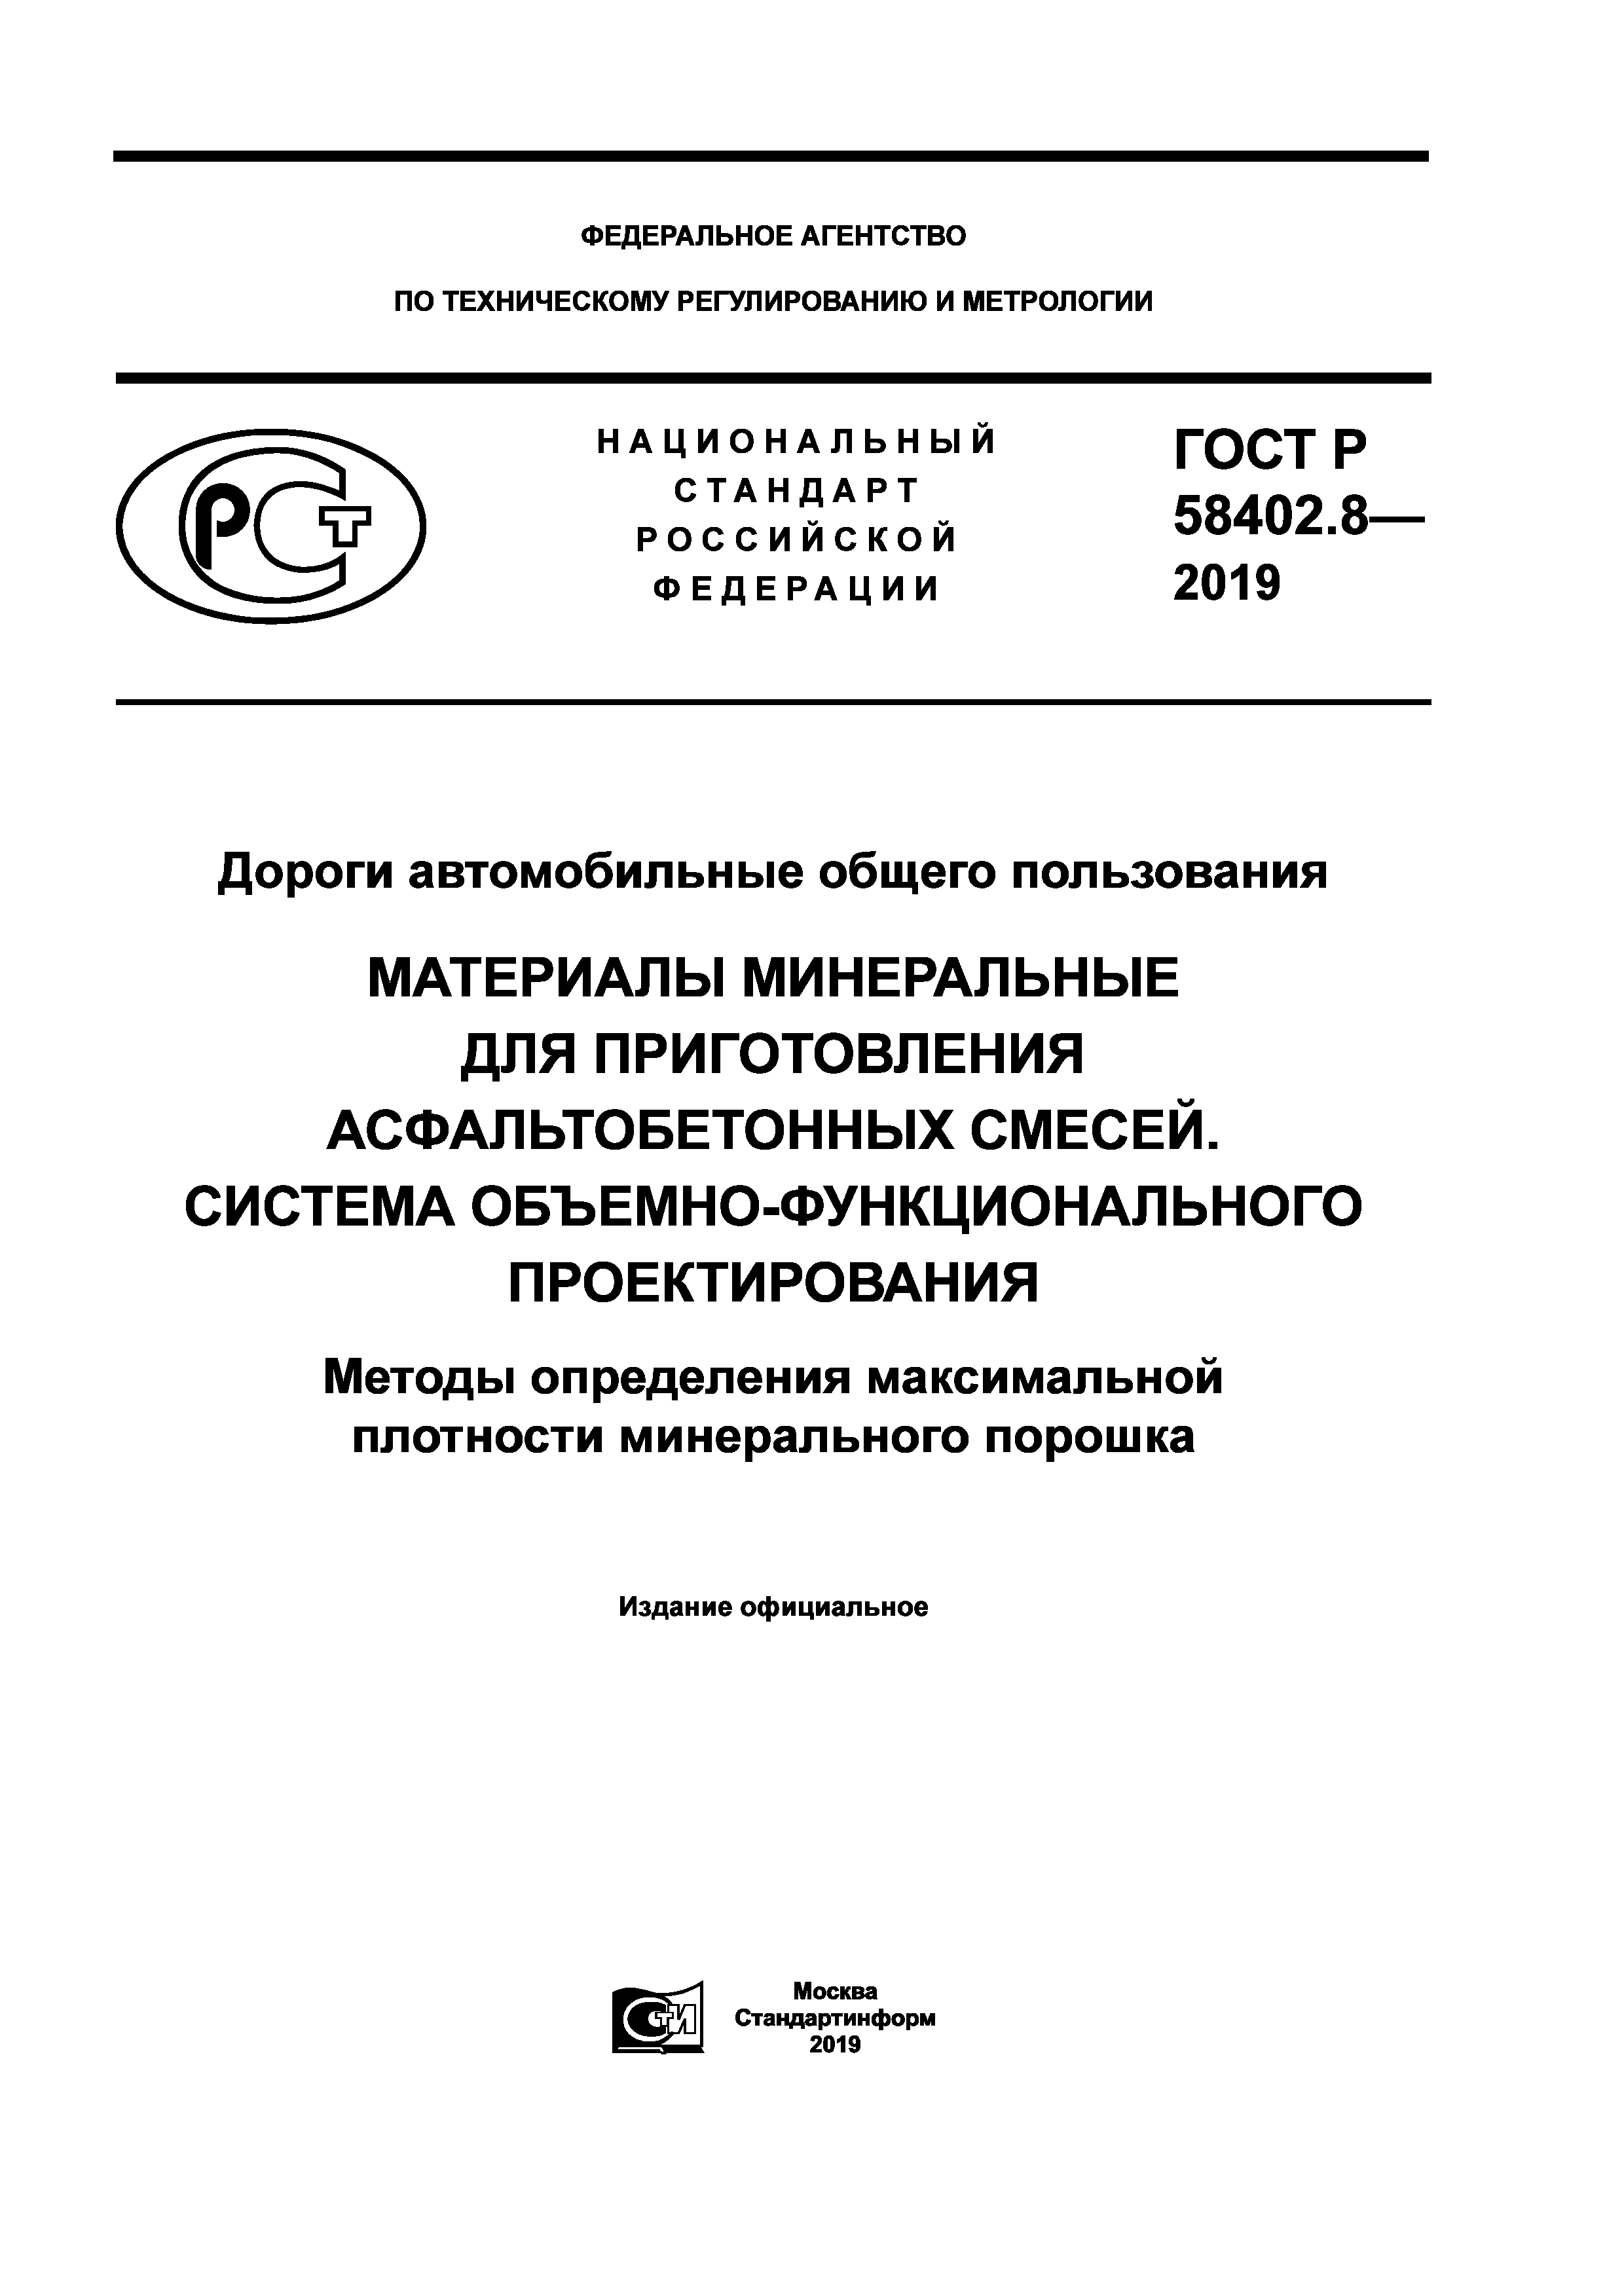 ГОСТ Р 58402.8-2019